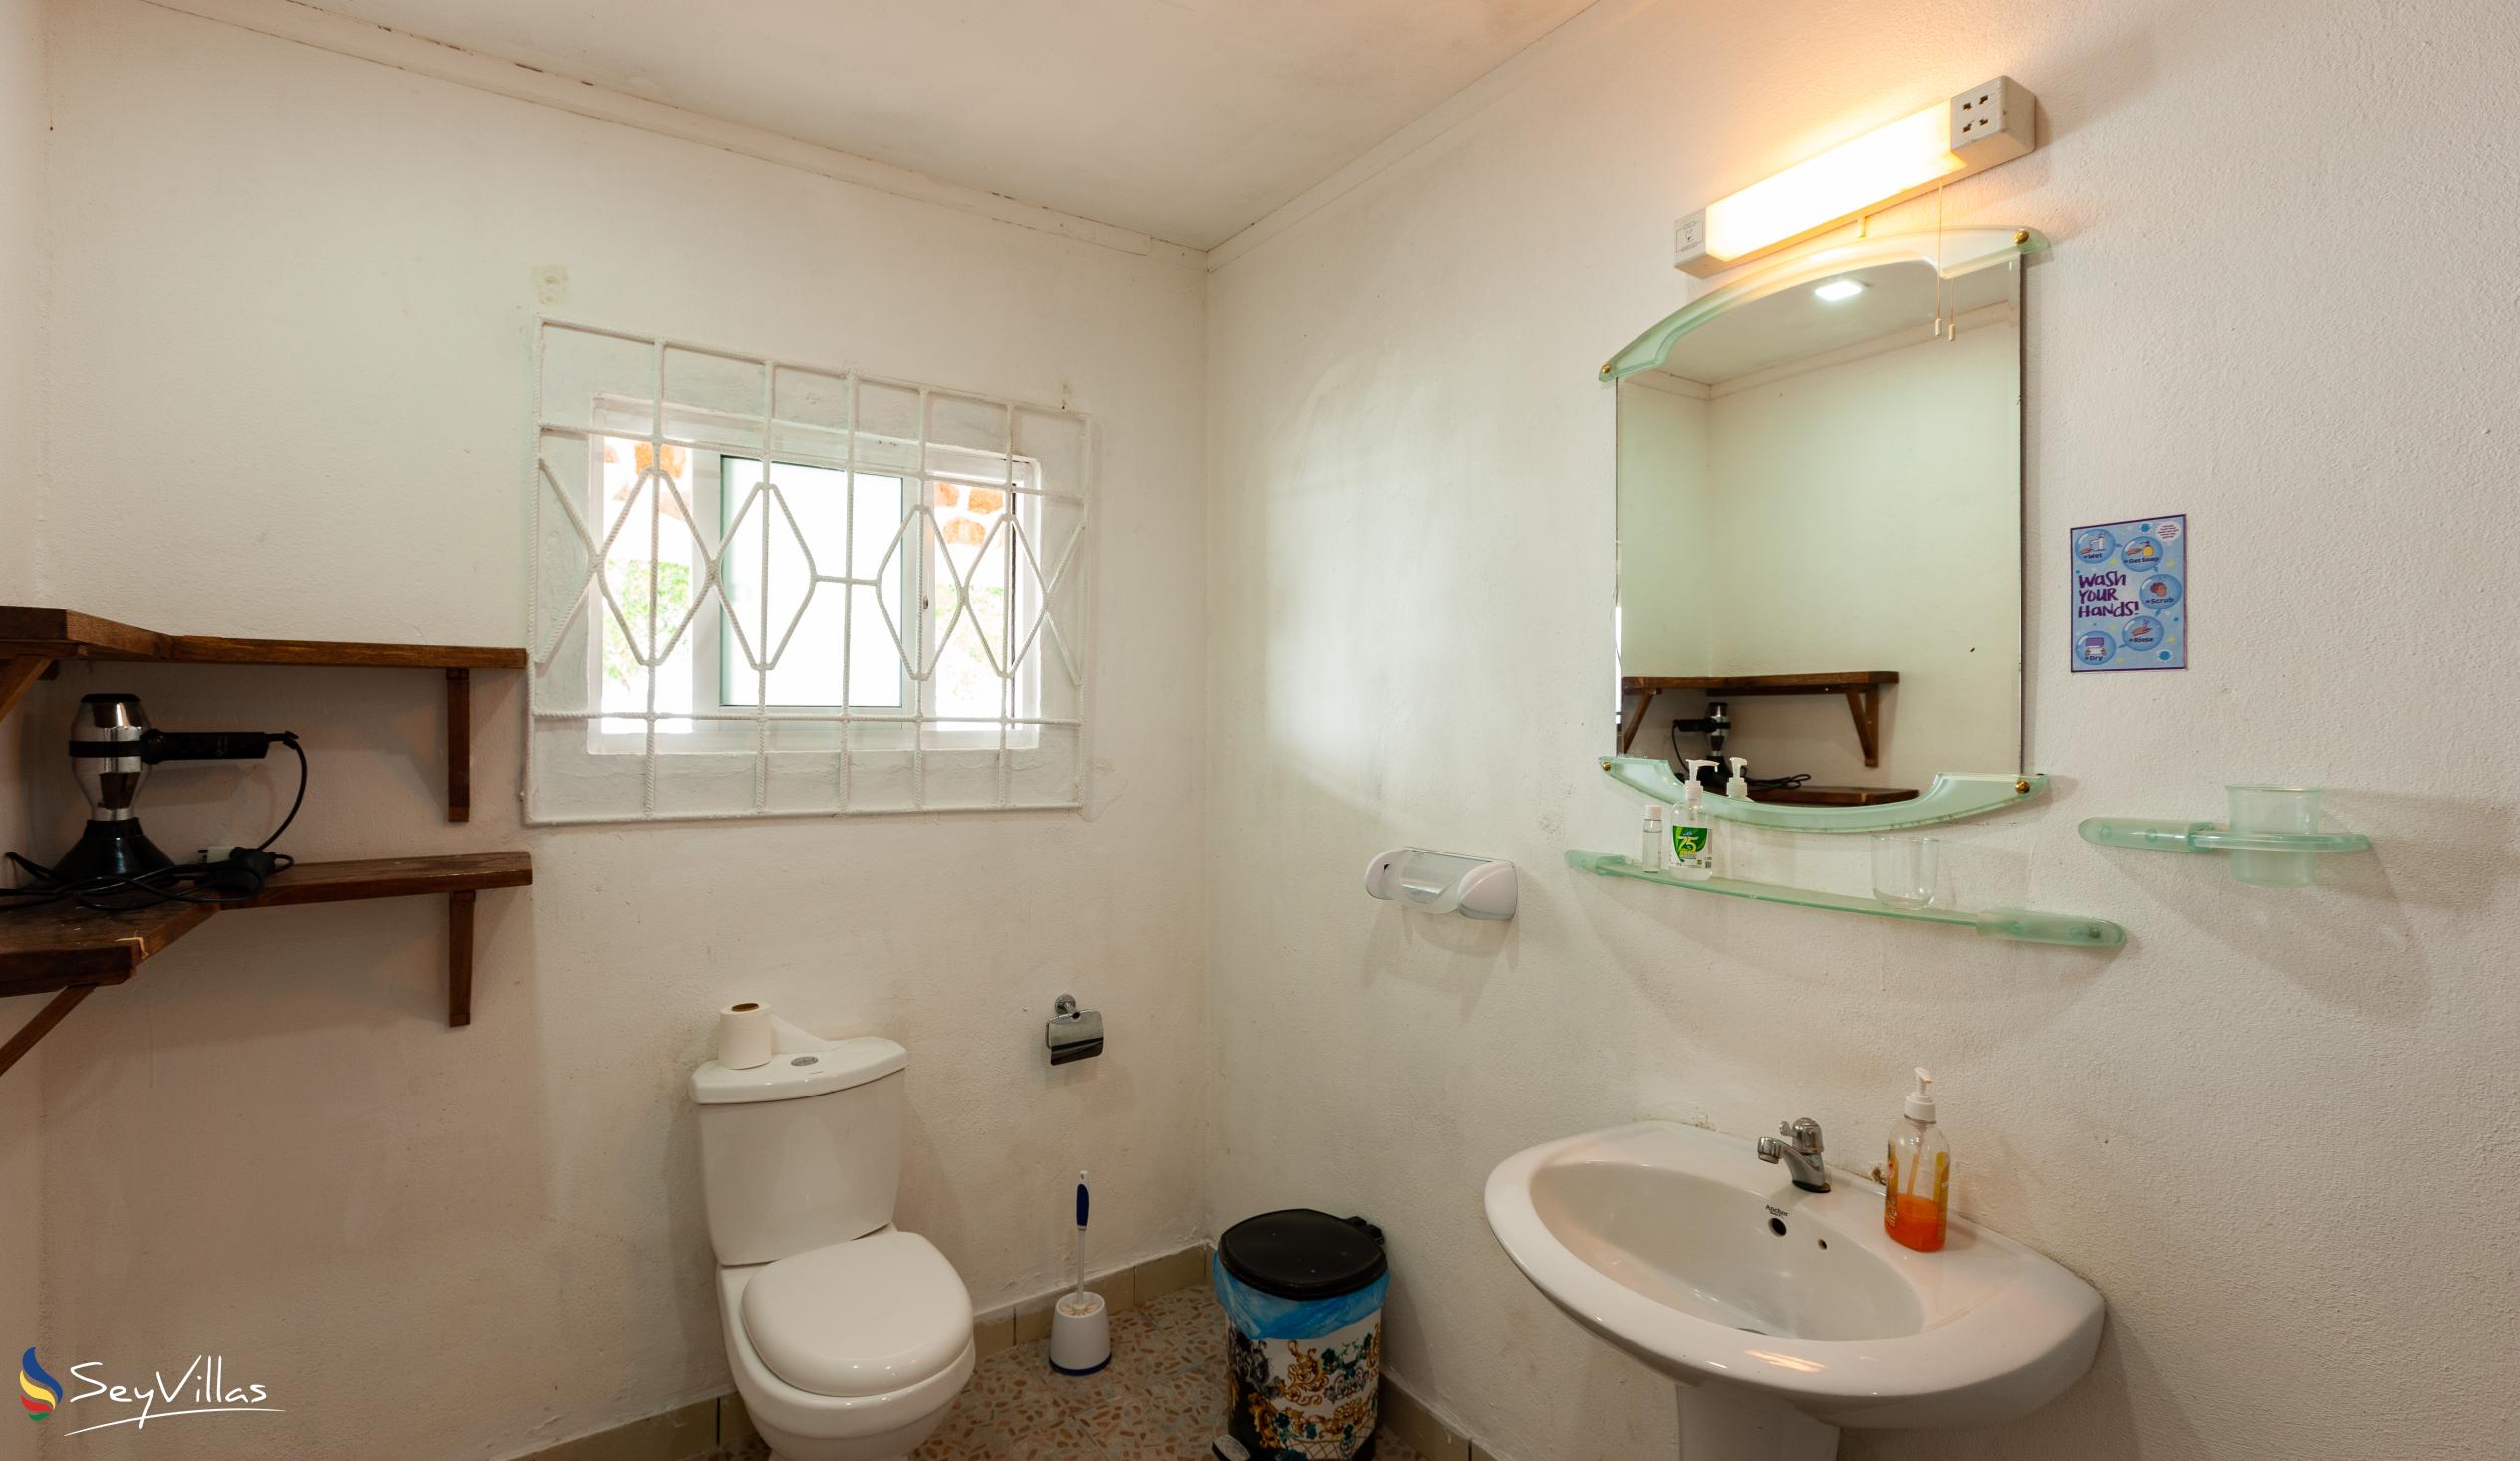 Photo 55: Maison du Soleil - 2-Bedroom Villa - Praslin (Seychelles)